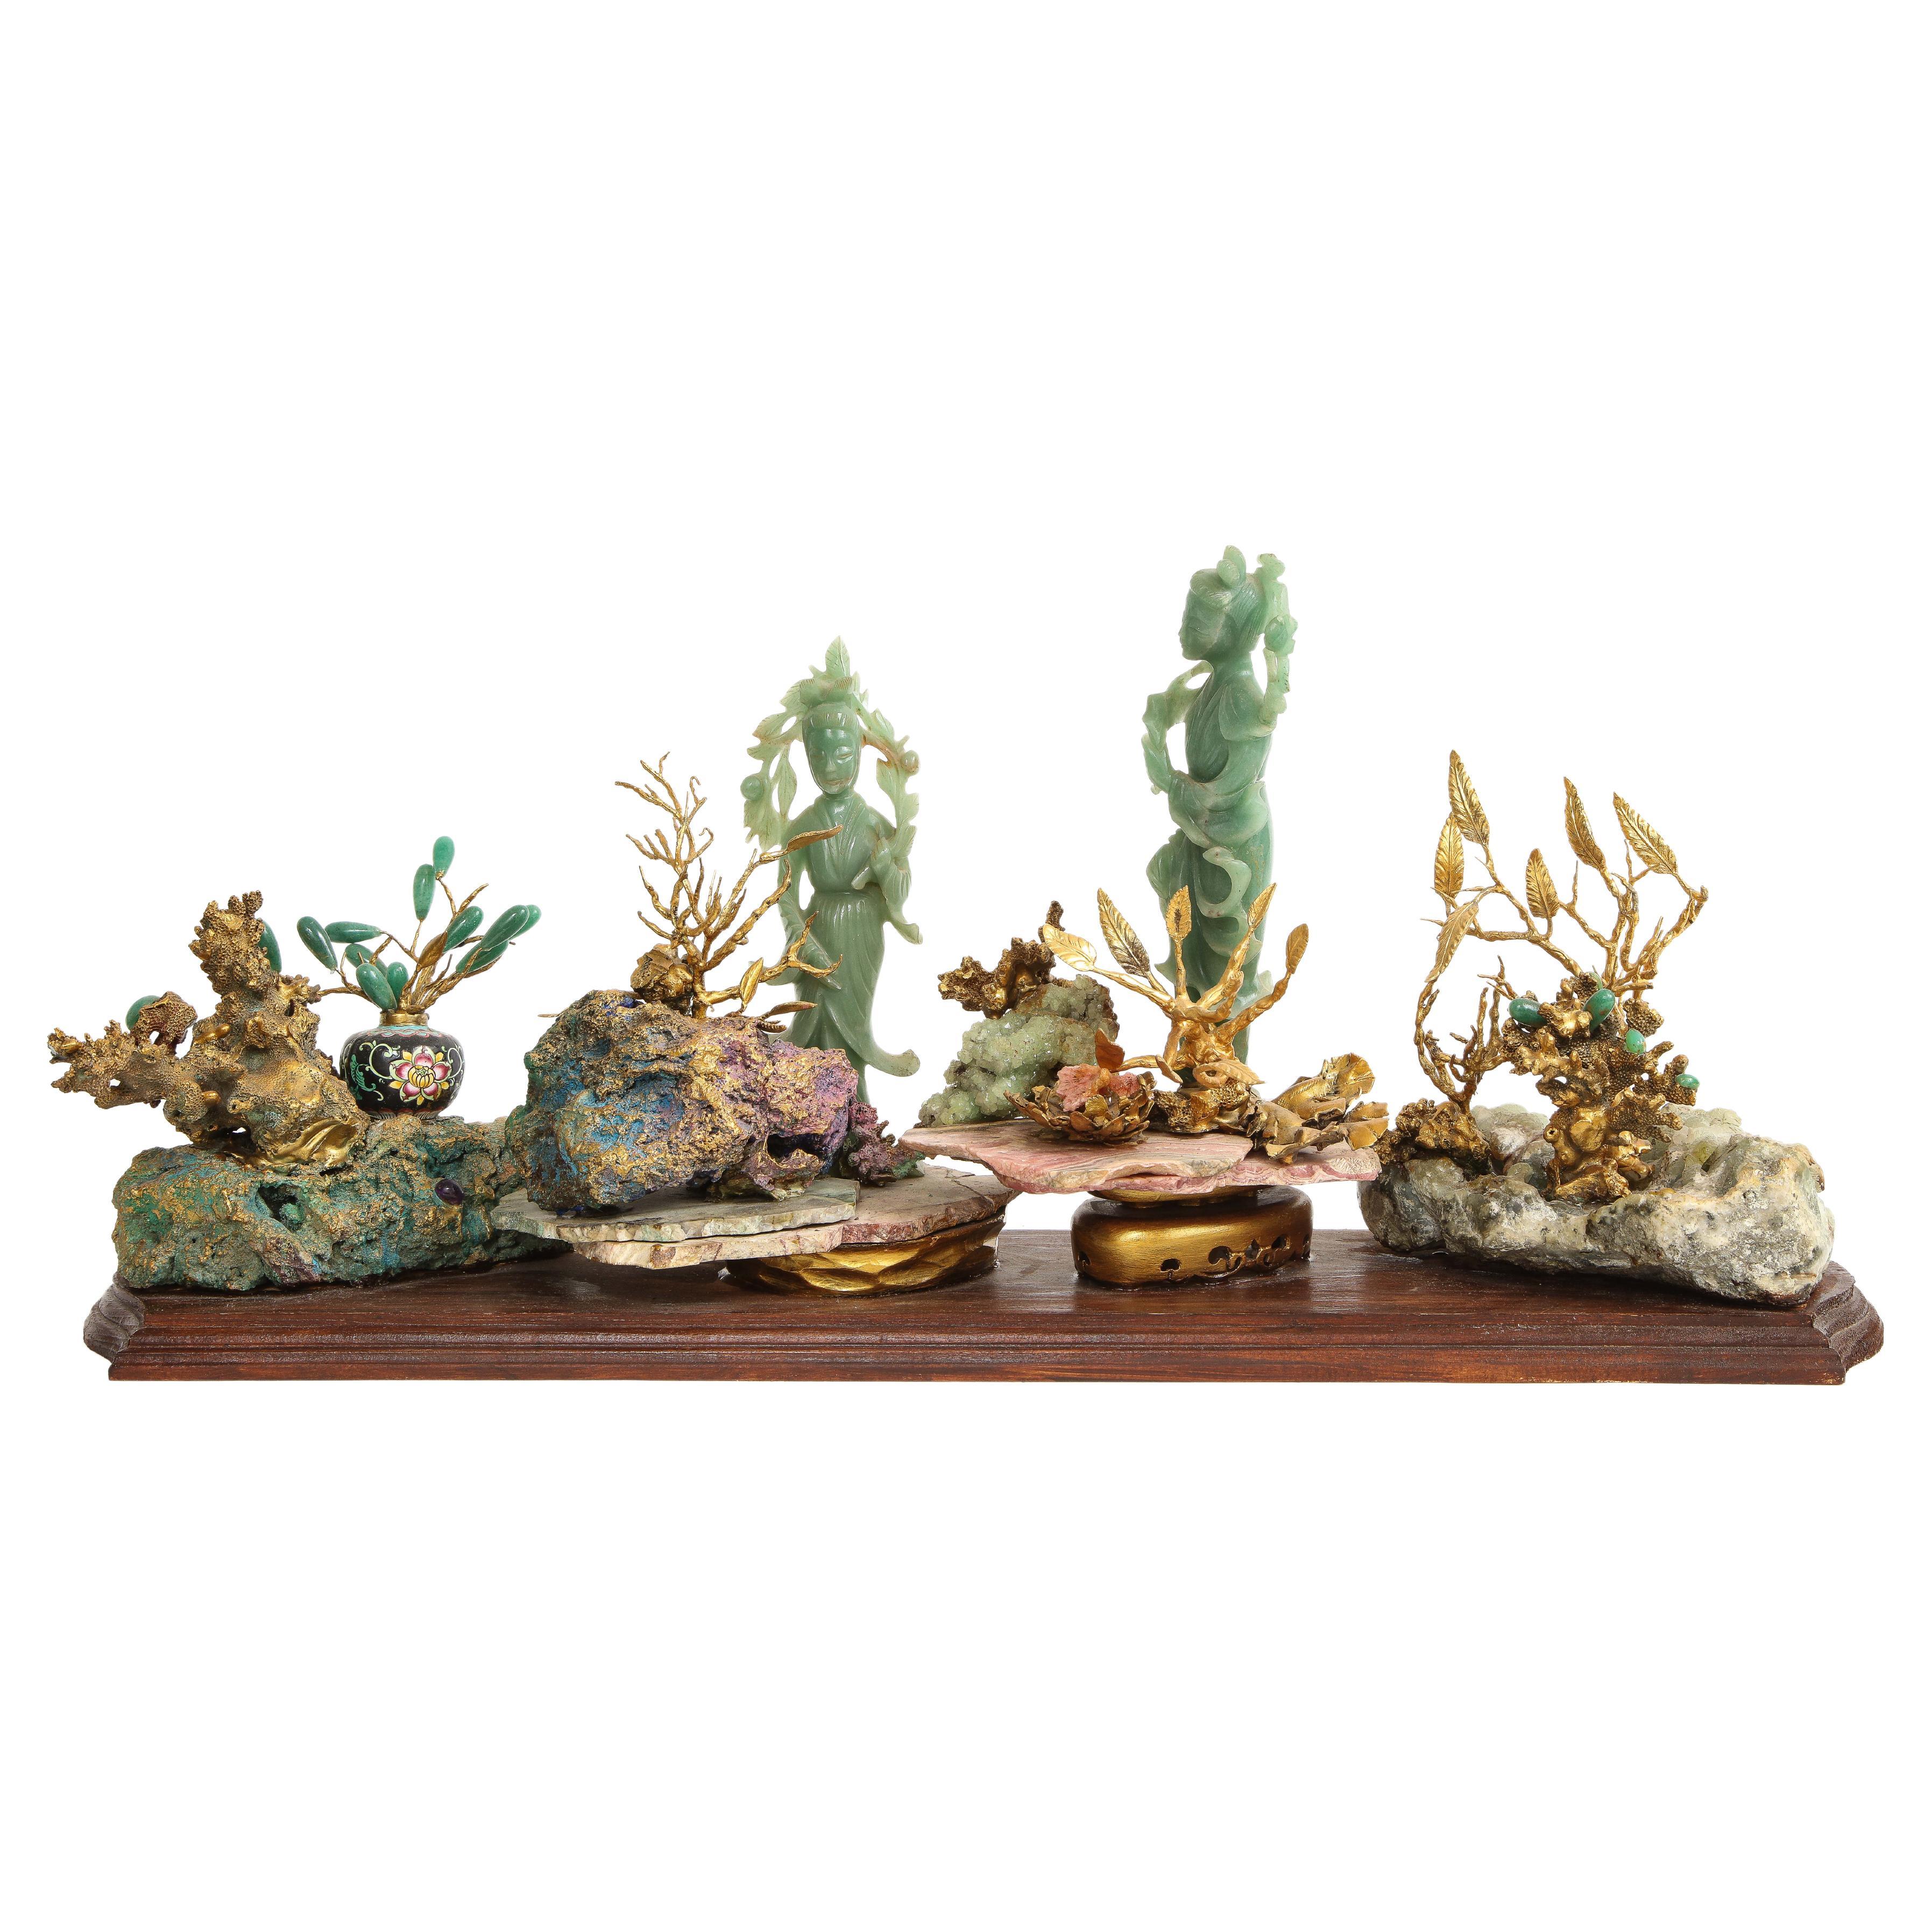 20th Century Chinese Jade, Cloisonné, & Gilt Metal Desk Accessory/Sculpture